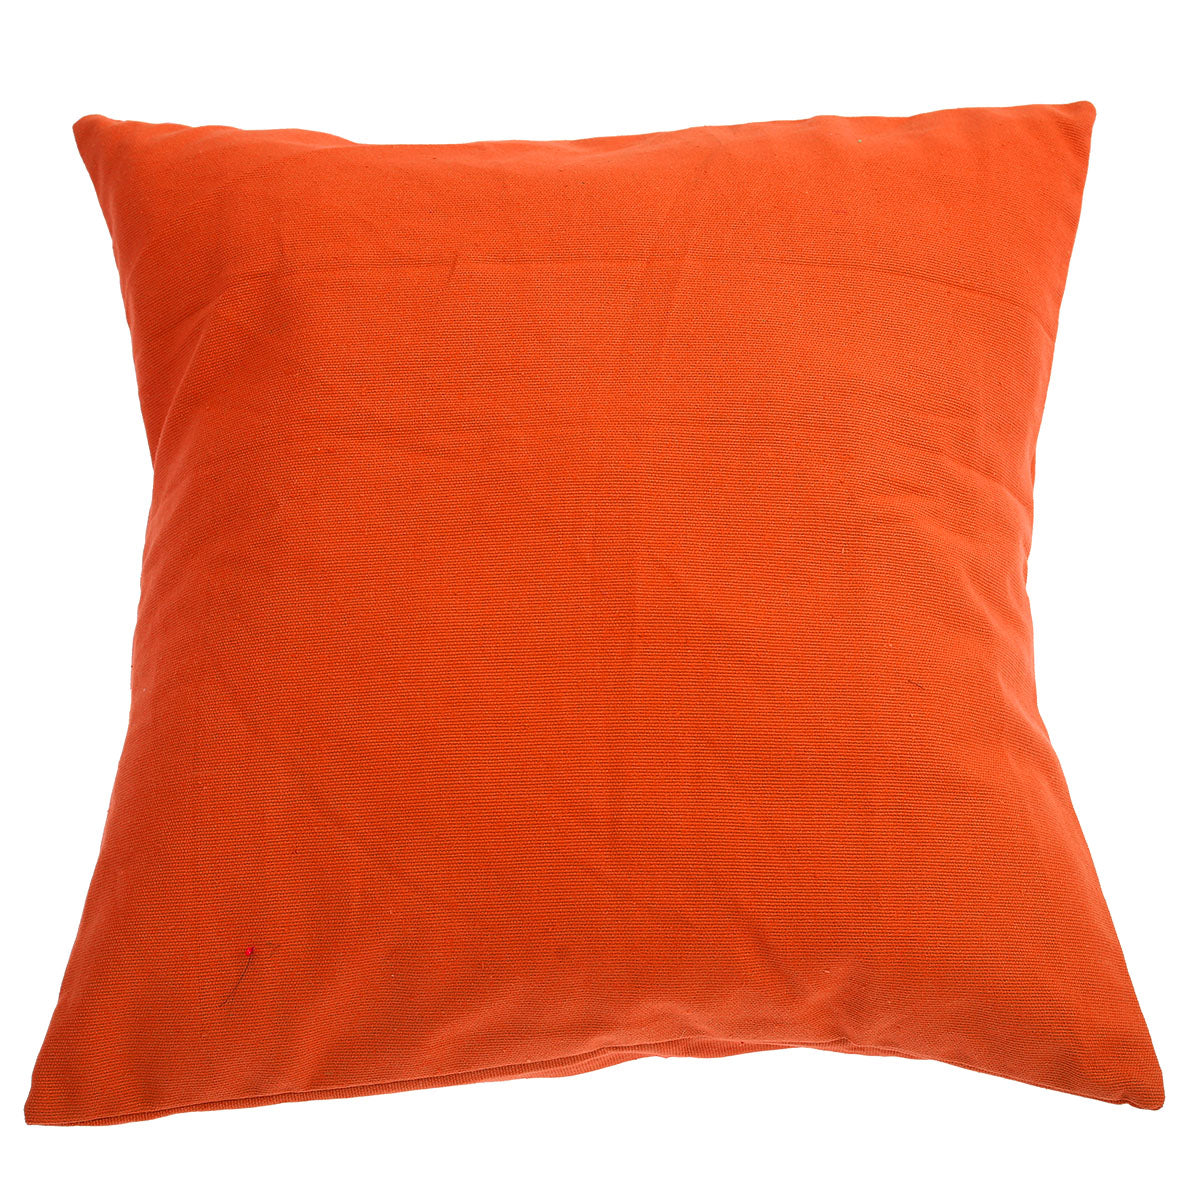 Orange Plan Cushion Cover 18x18"